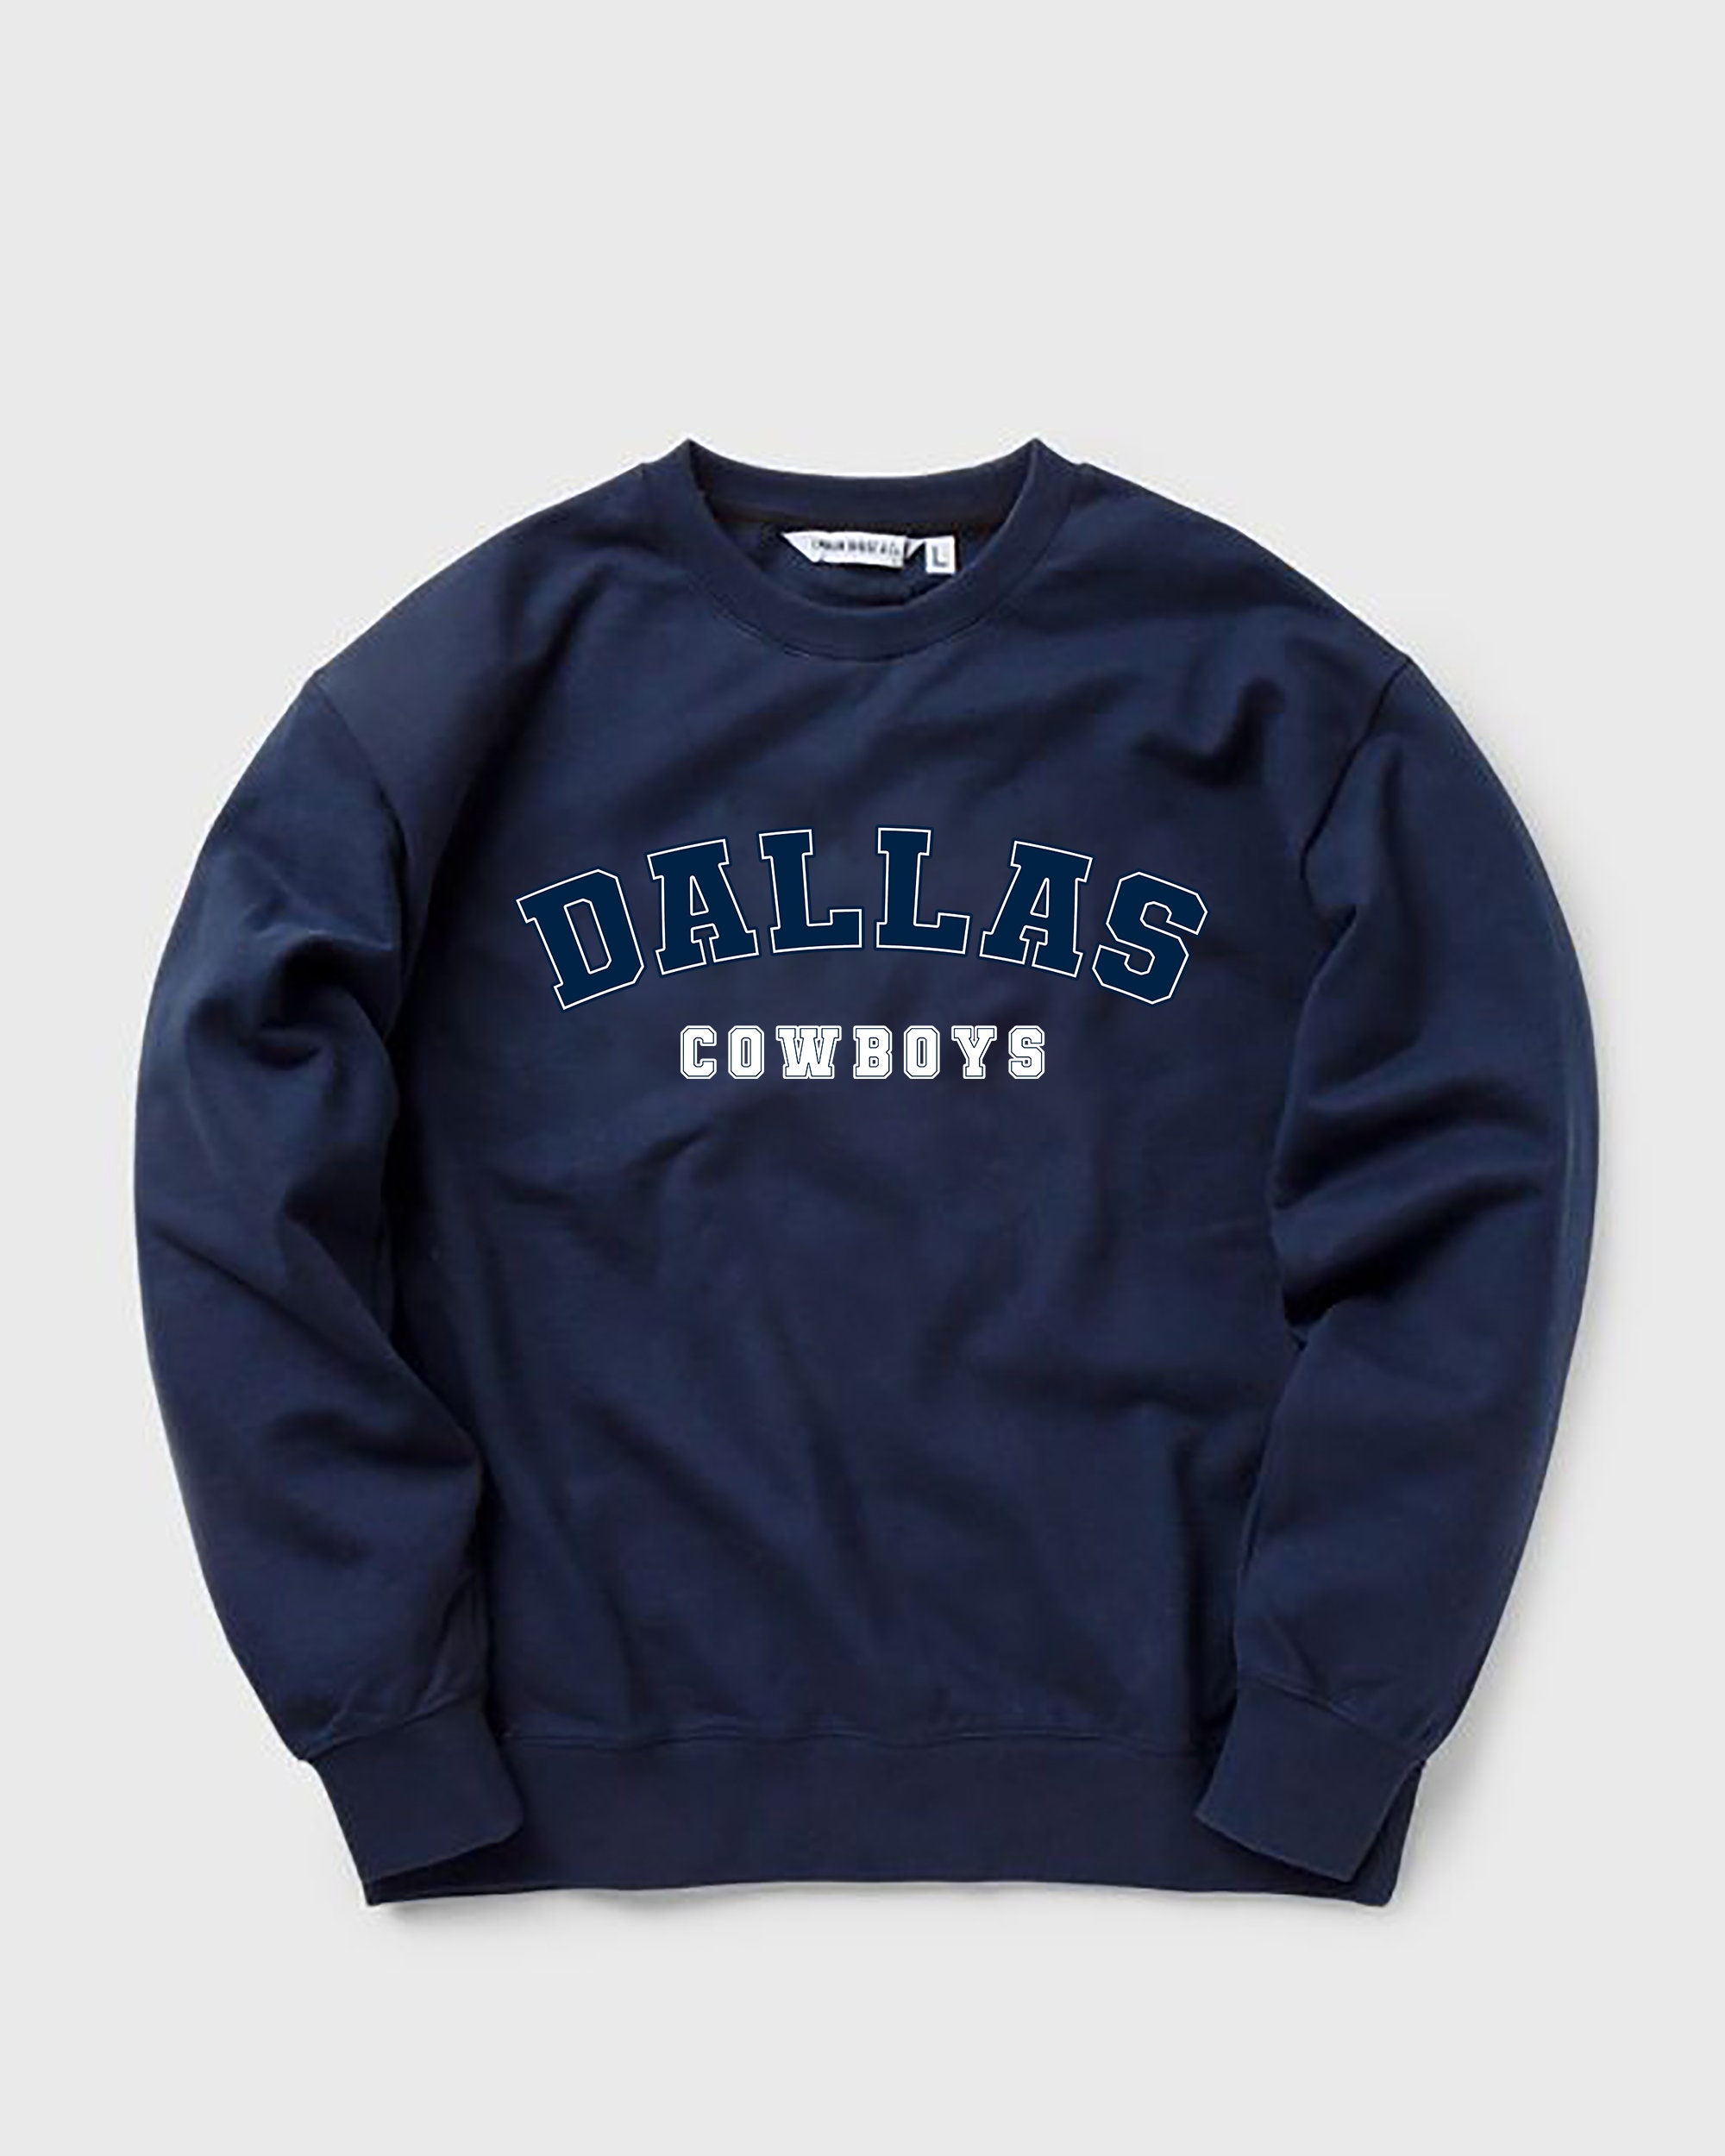 Dallas Cowboys Football Team Unisex Sweatshirt